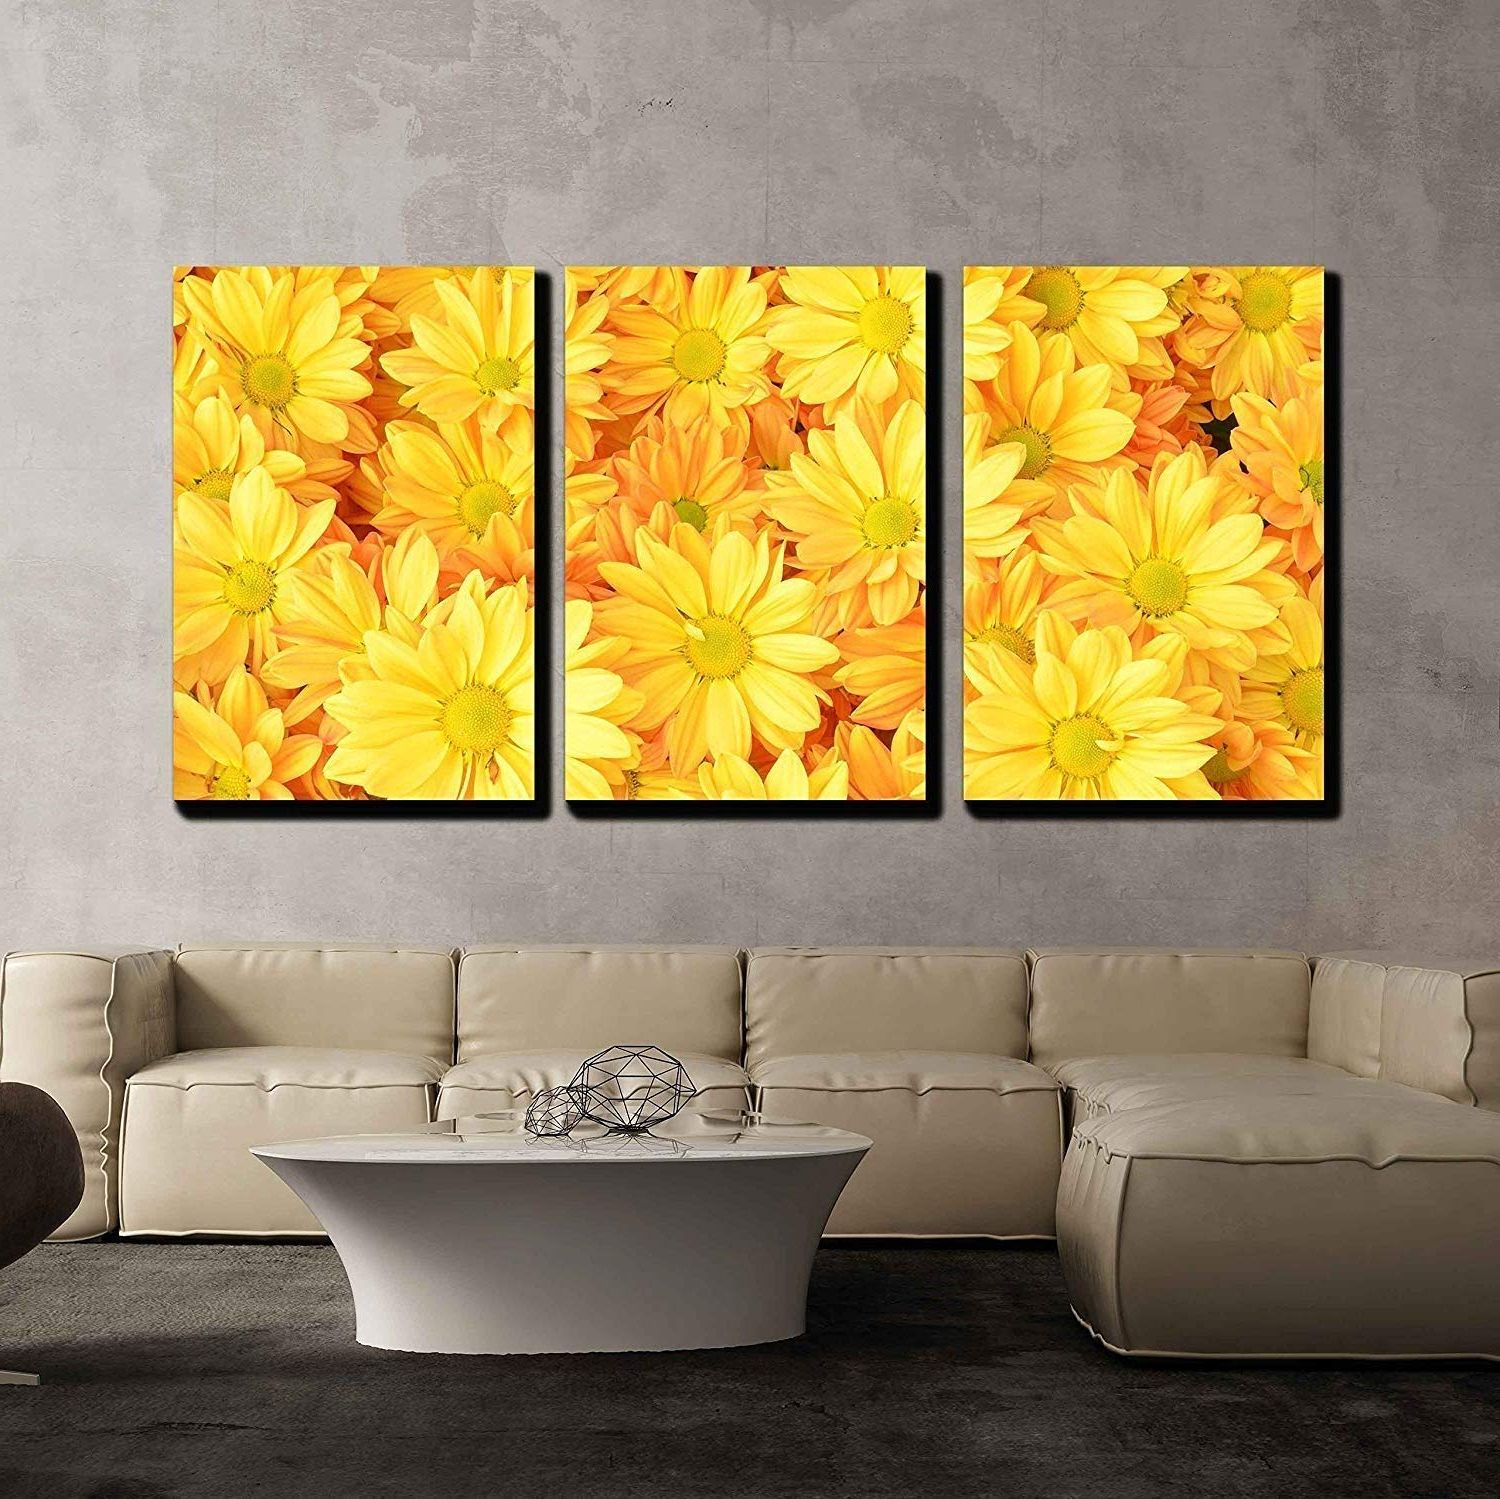 Wall Framed Art Prints Regarding Well Liked Wall26 – 3 Piece Canvas Wall Art – Yellow Chrysanthemum (View 5 of 20)